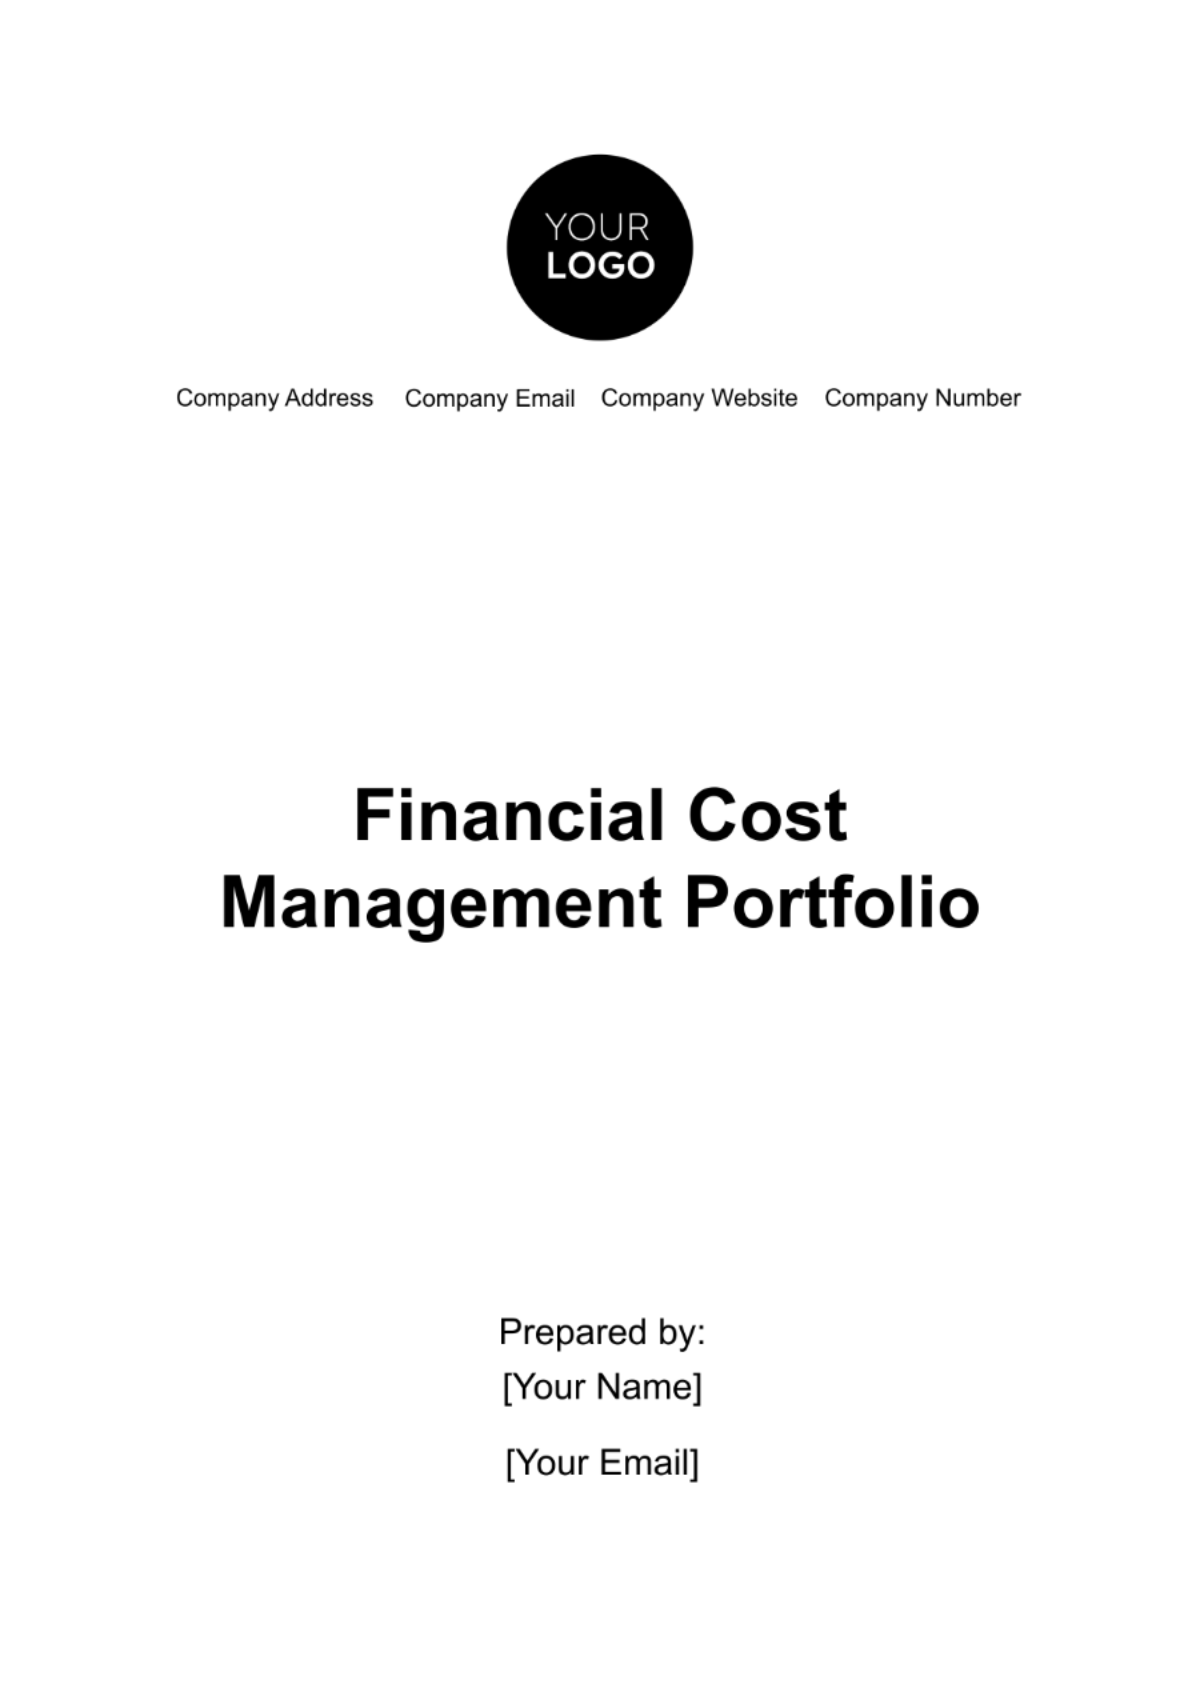 Financial Cost Management Portfolio Template